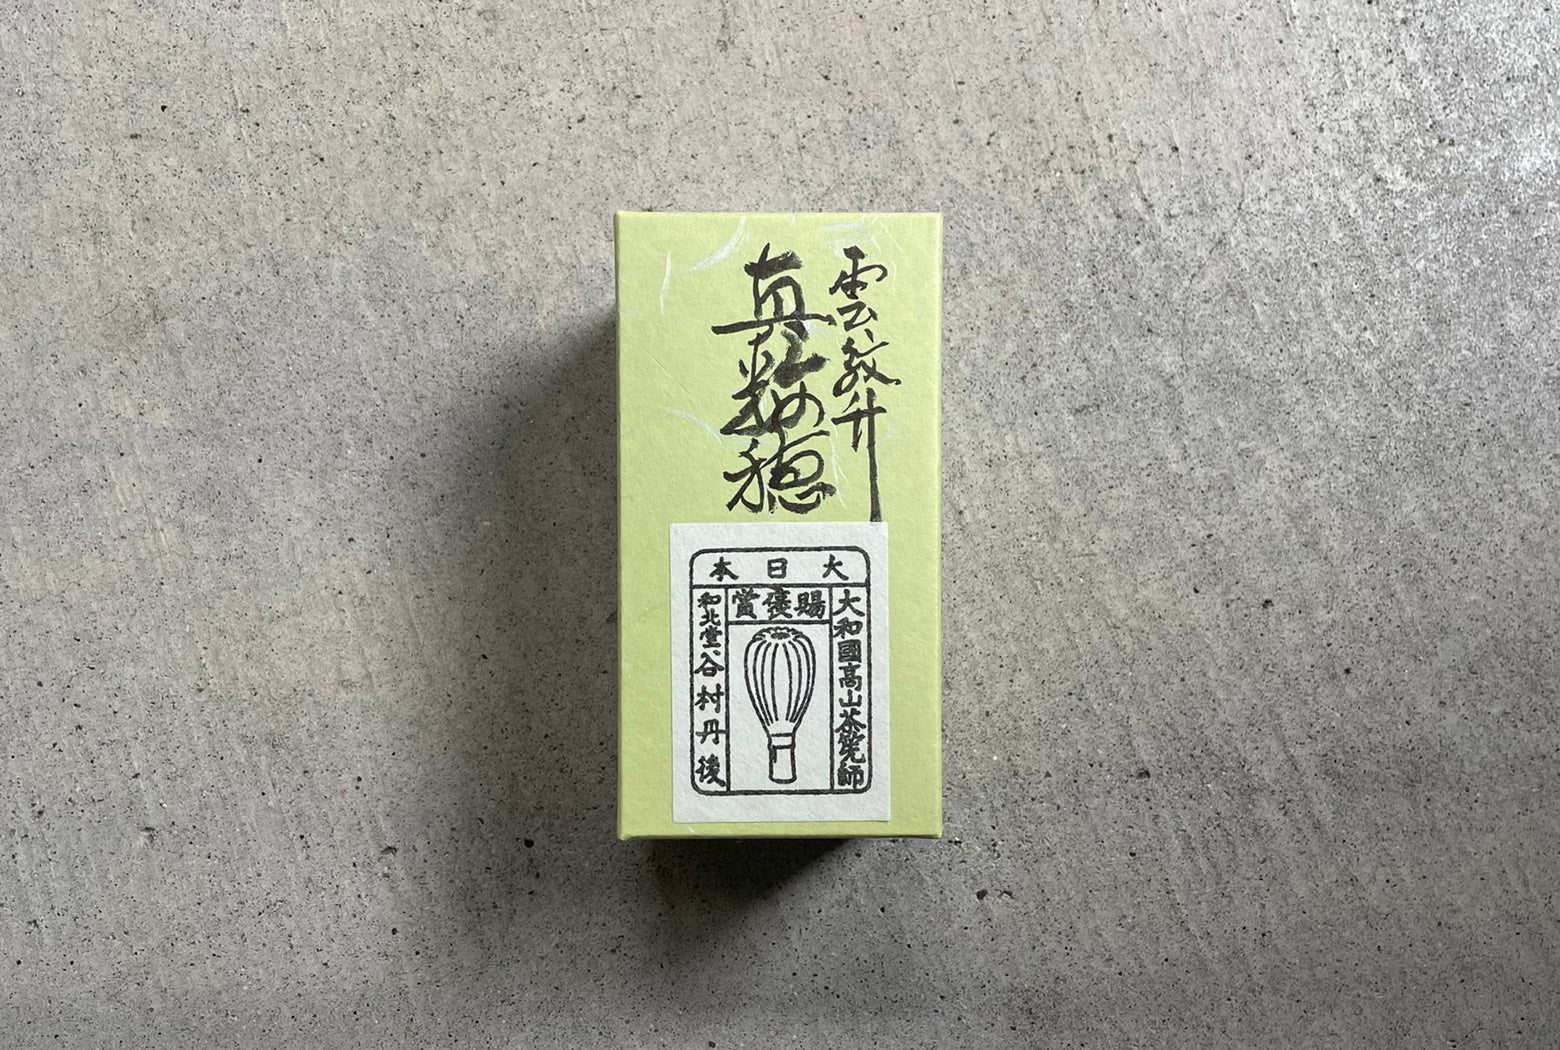 雲紋竹　茶筅　(cloud crest bamboo whisk)